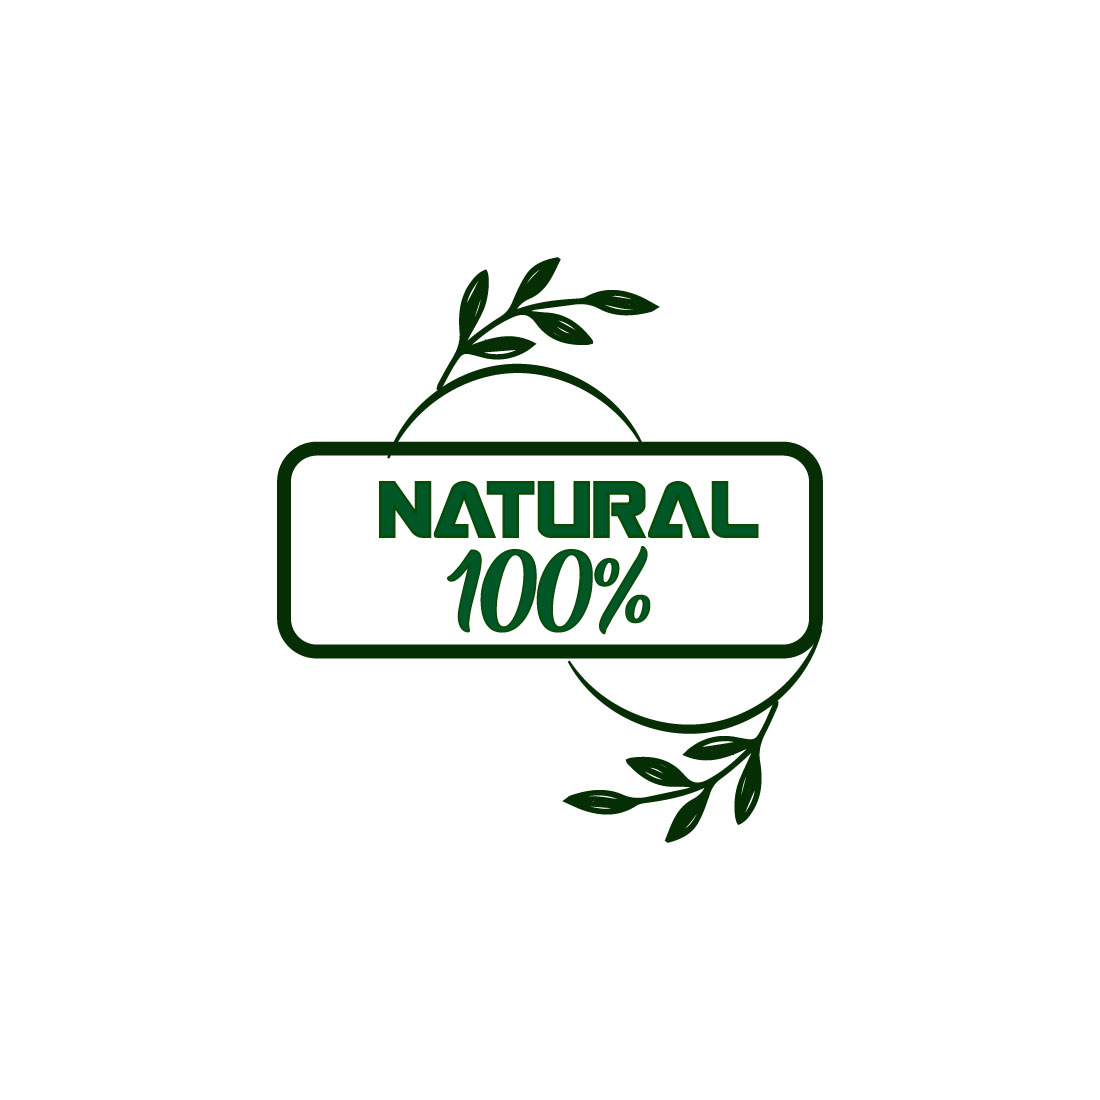 Free organic label logo preview image.